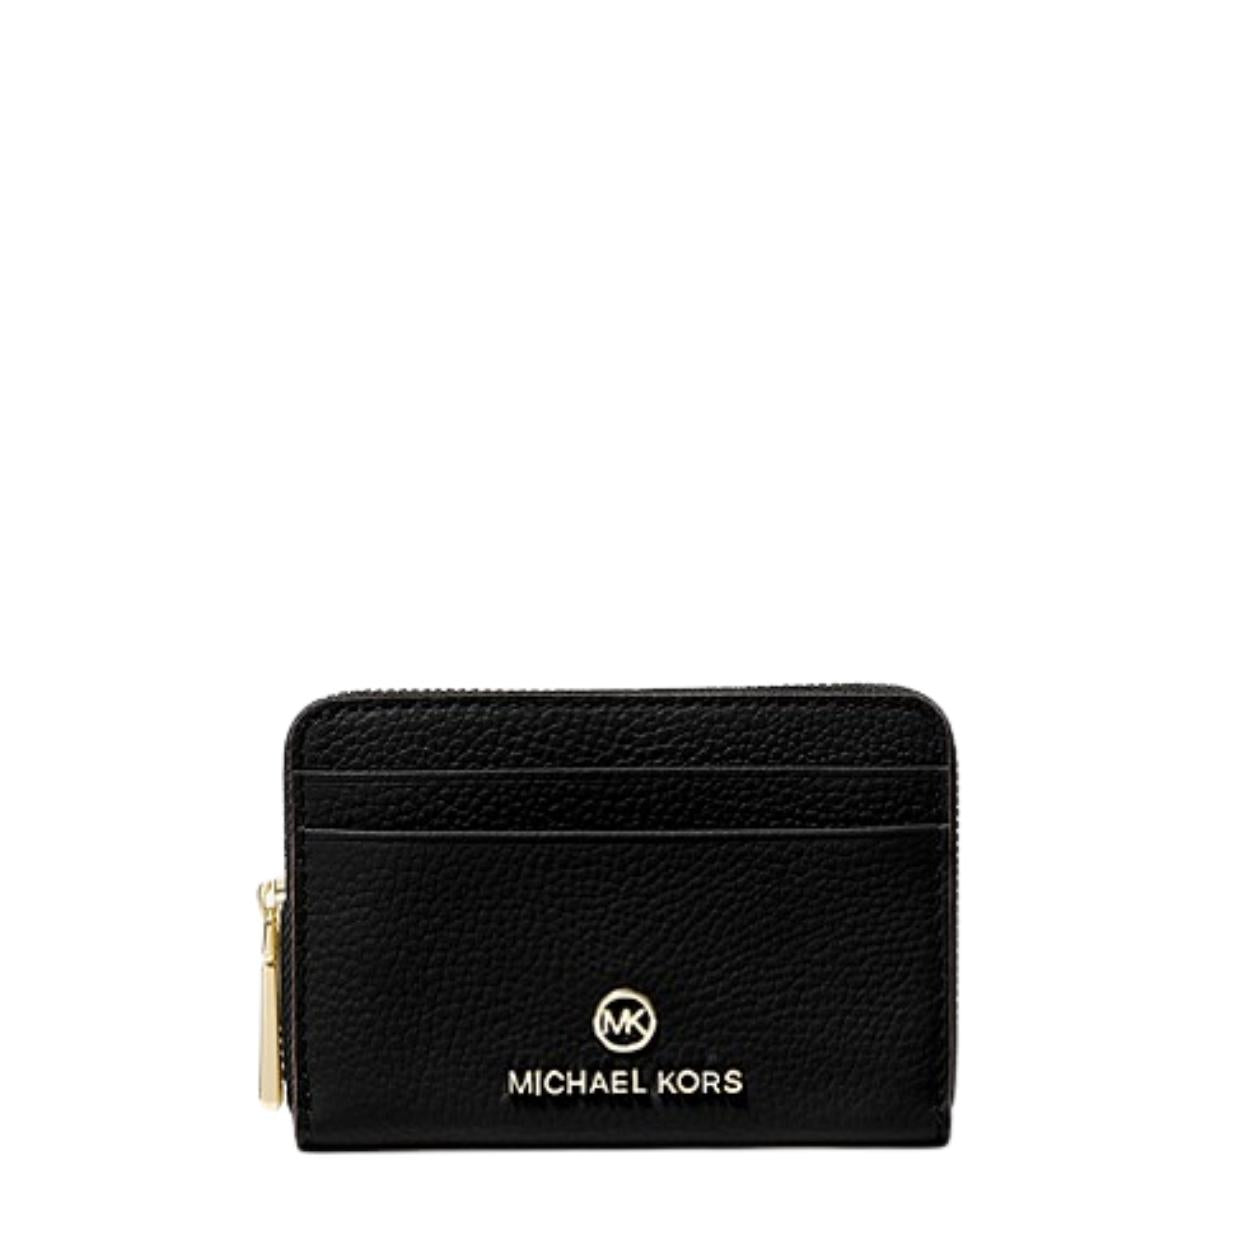 Michael Kors Jet Set Travel Large Flat Zip MF Phone Case Wristlet Wallet  Black 192877339588 | eBay